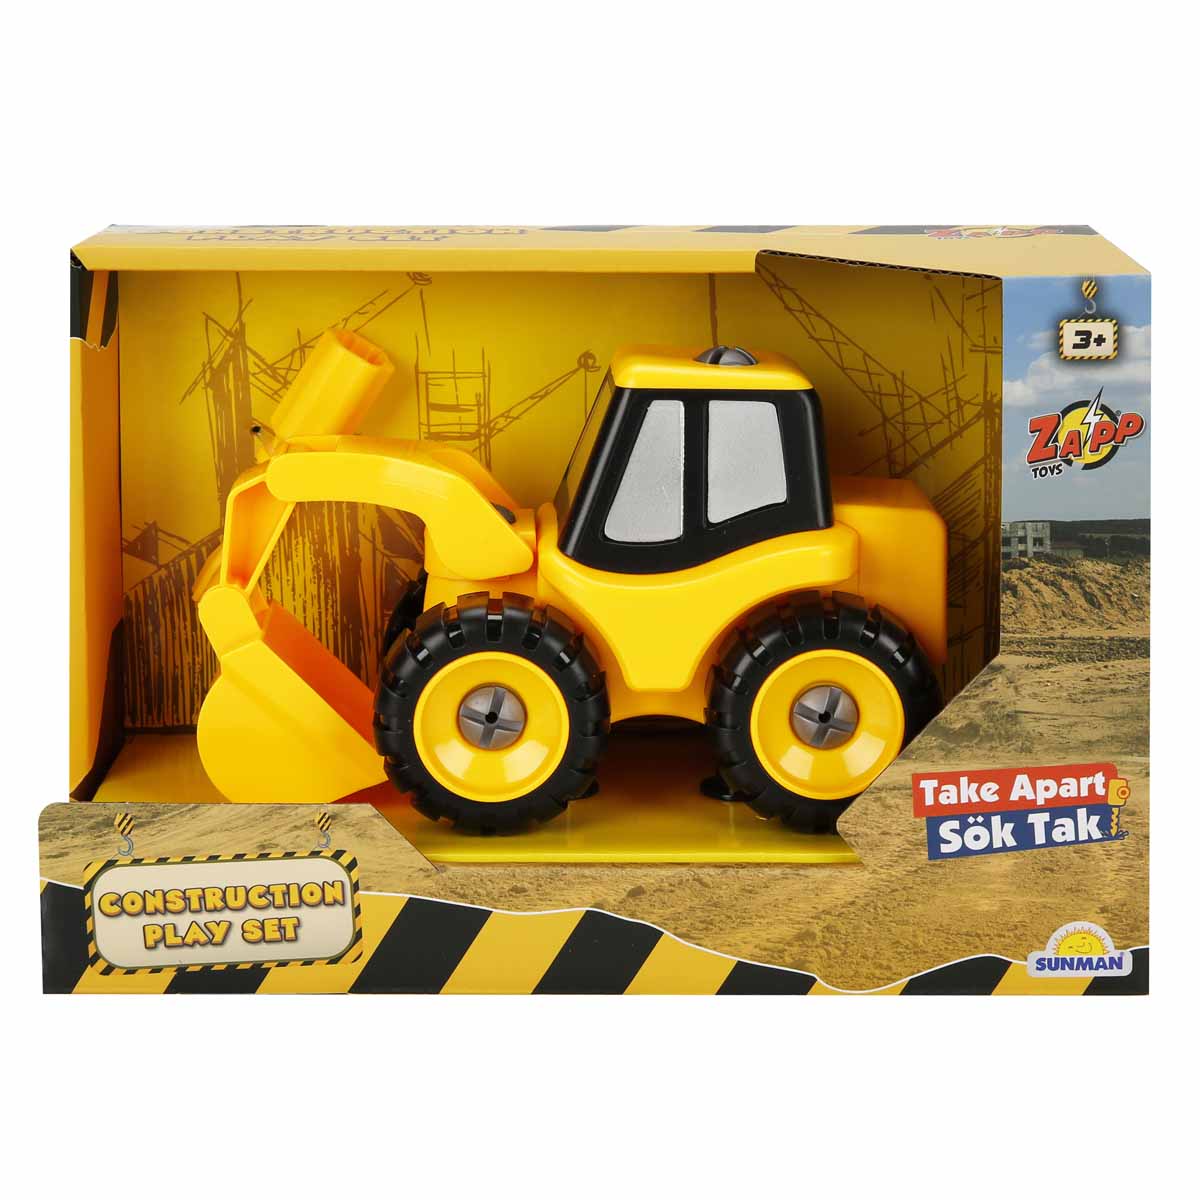 Vehicul de constructie cu surubelnita, Zapp Toys, Excavator